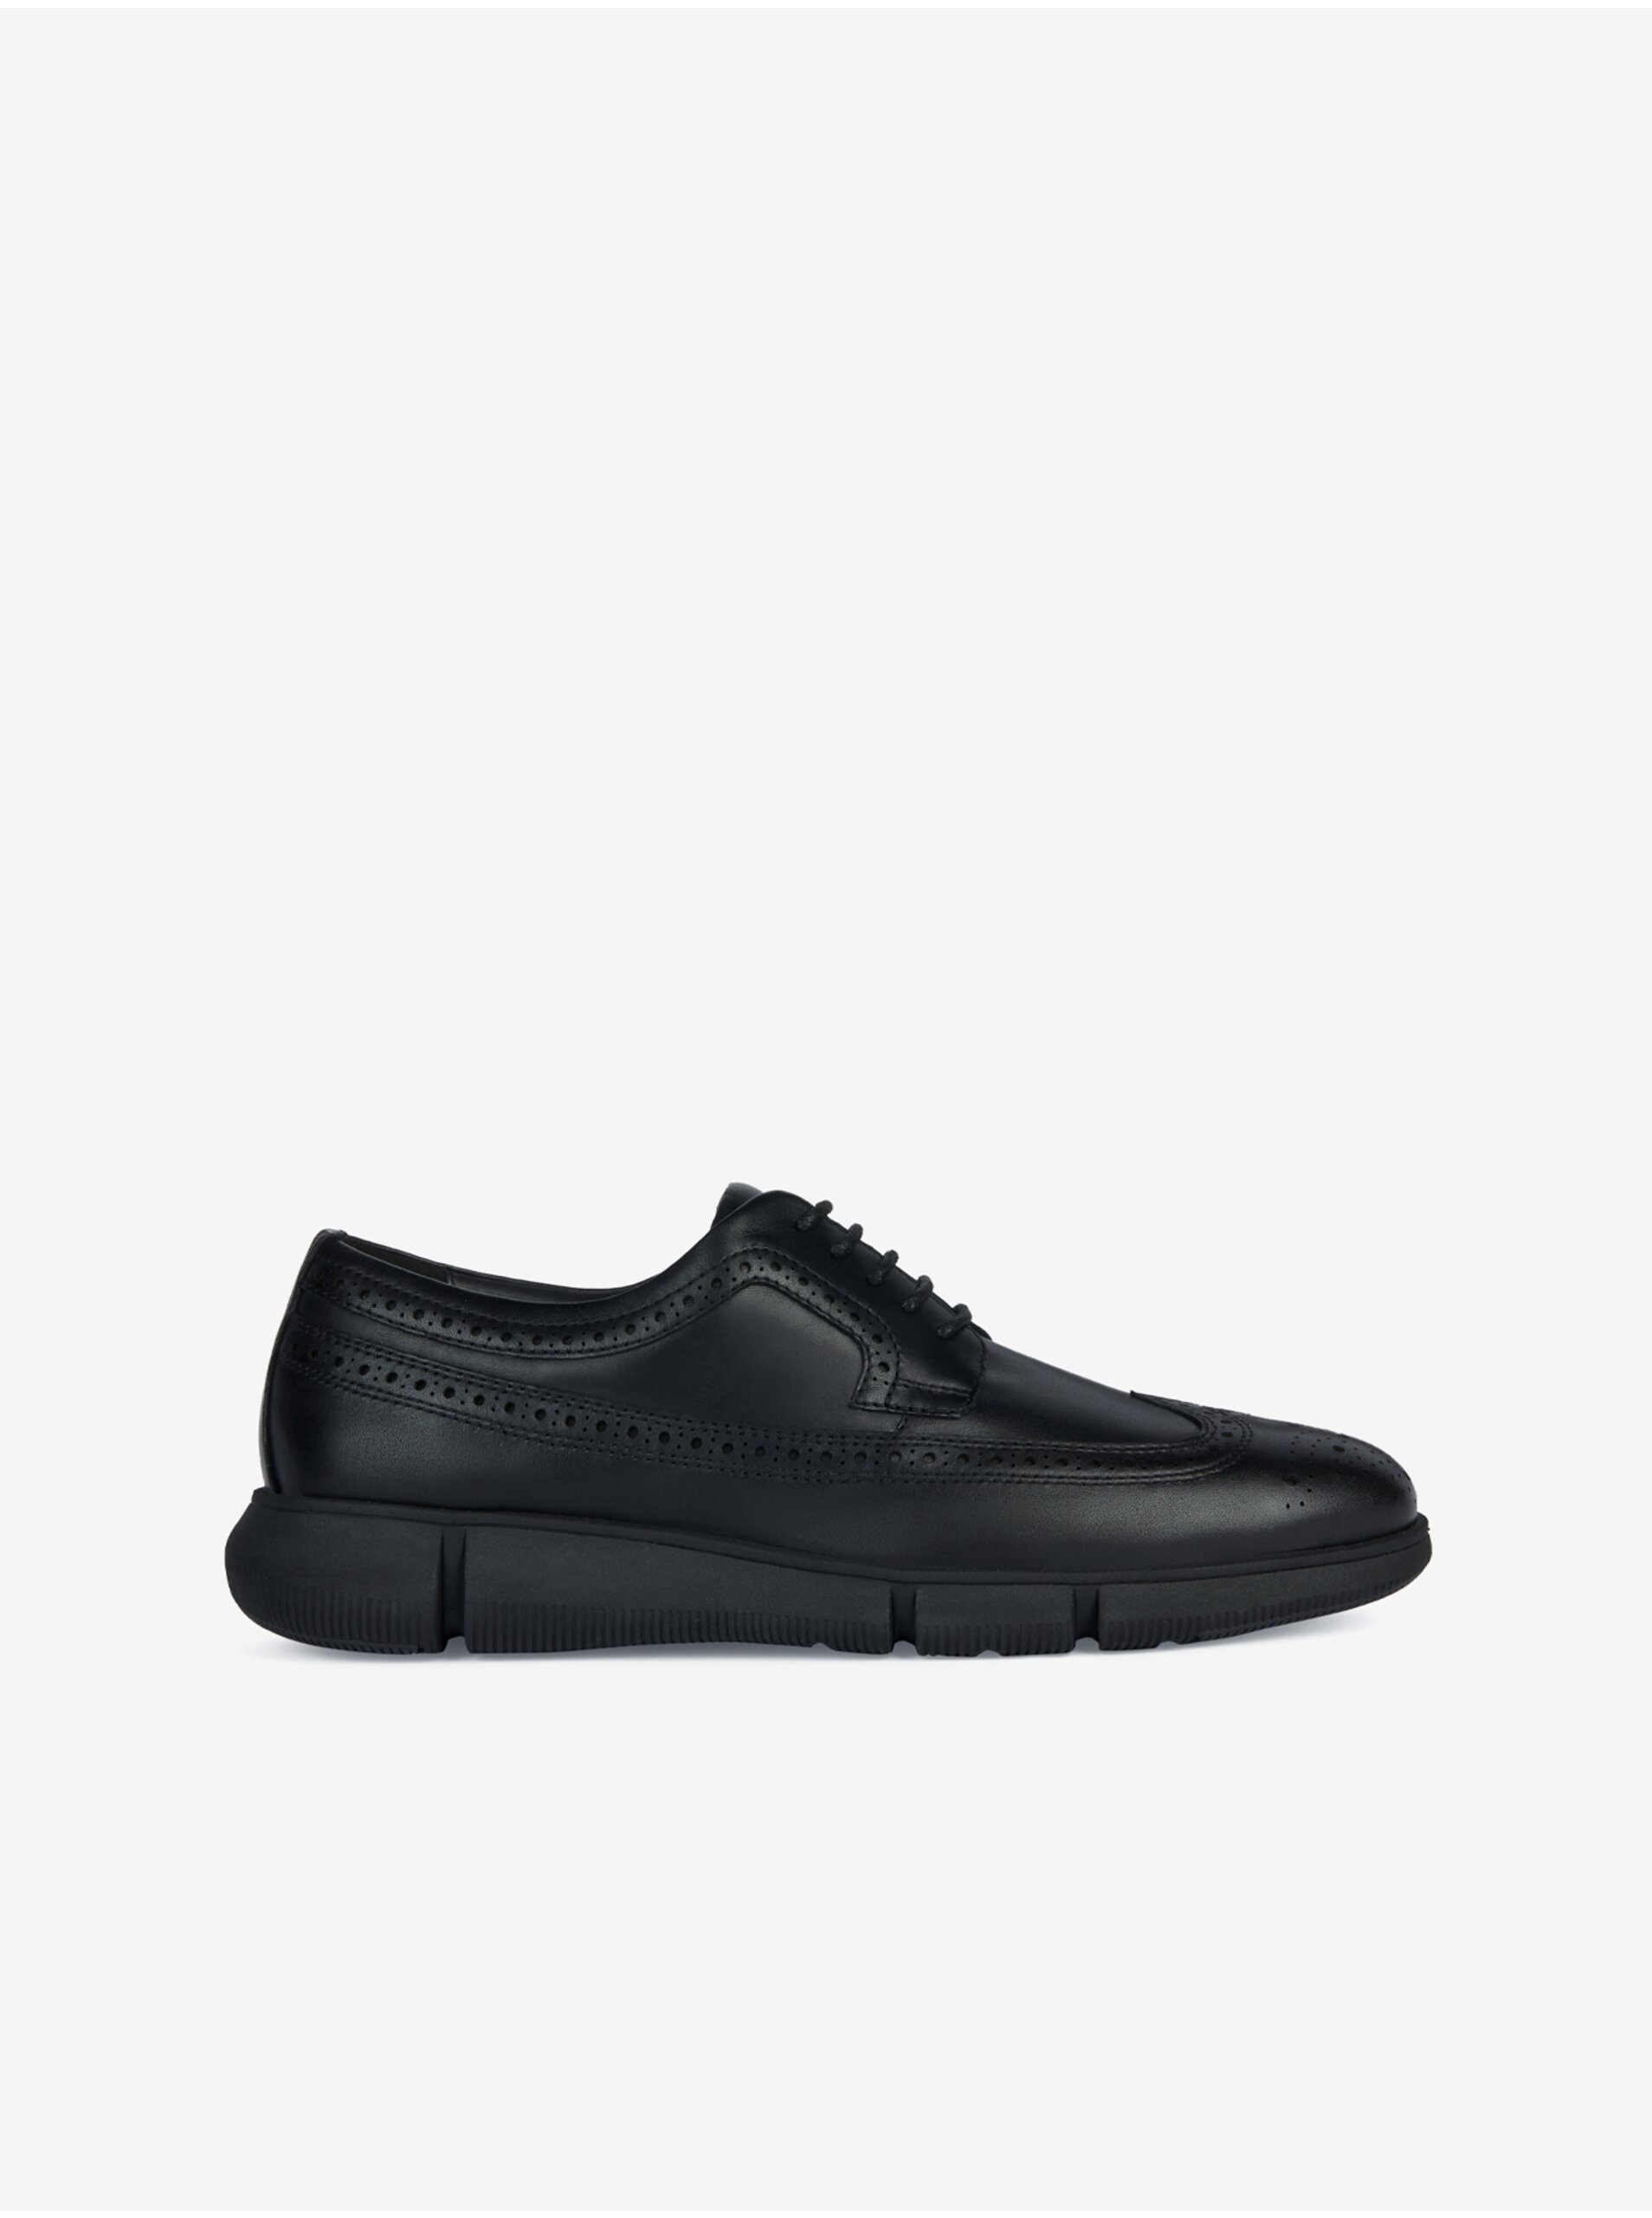 Black men's leather shoes Geox Adacter - Men